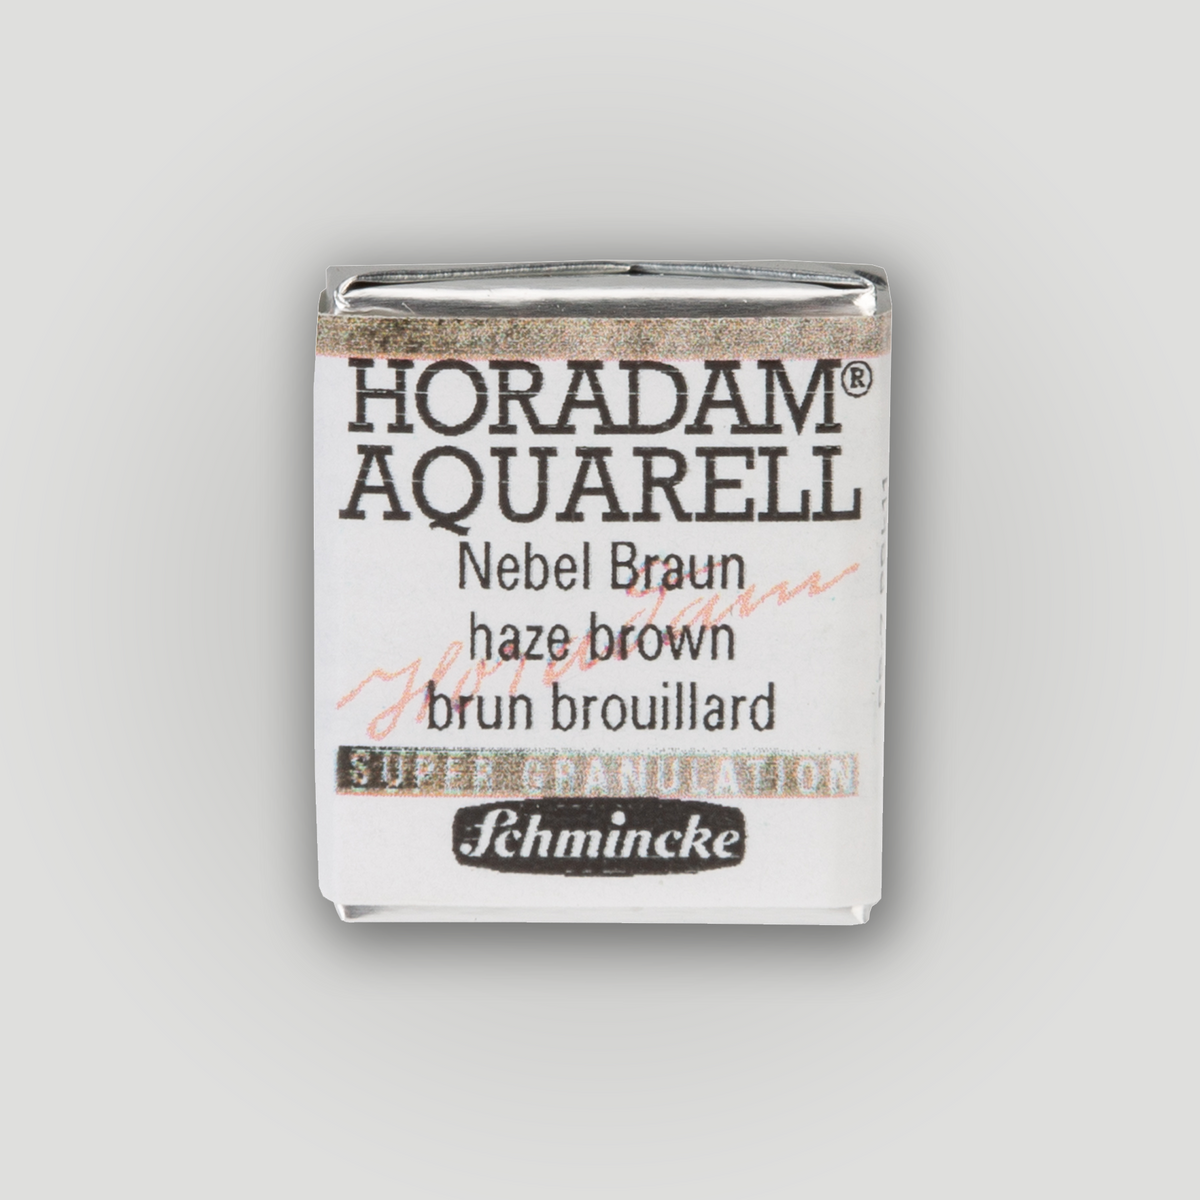 Schmincke Horadam® Super granulation Half pan 969 Haze brown 3